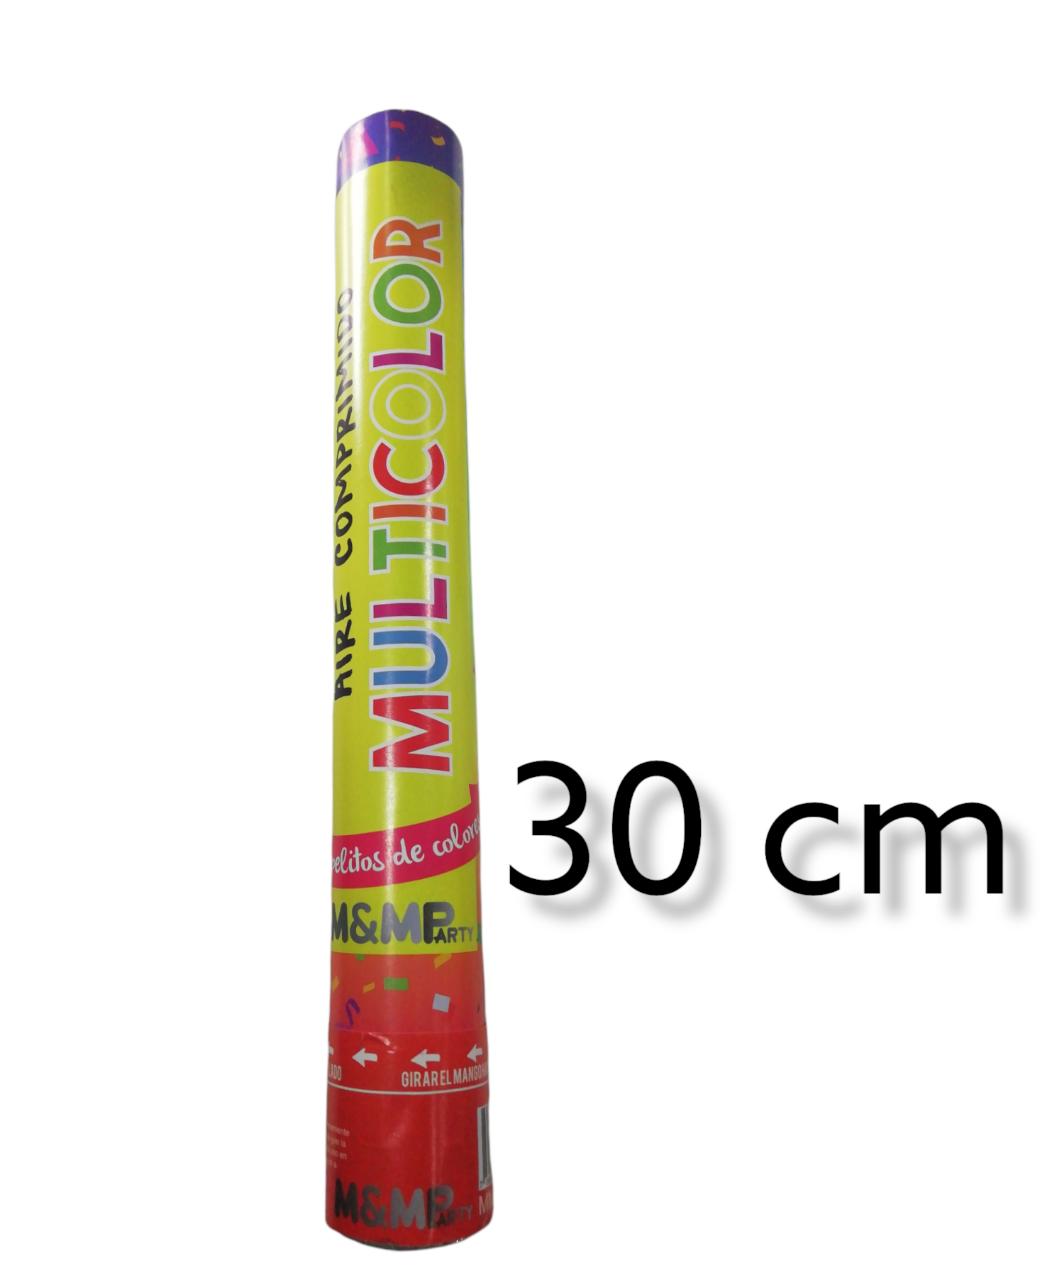 CaÑon multicolor 30 cm 